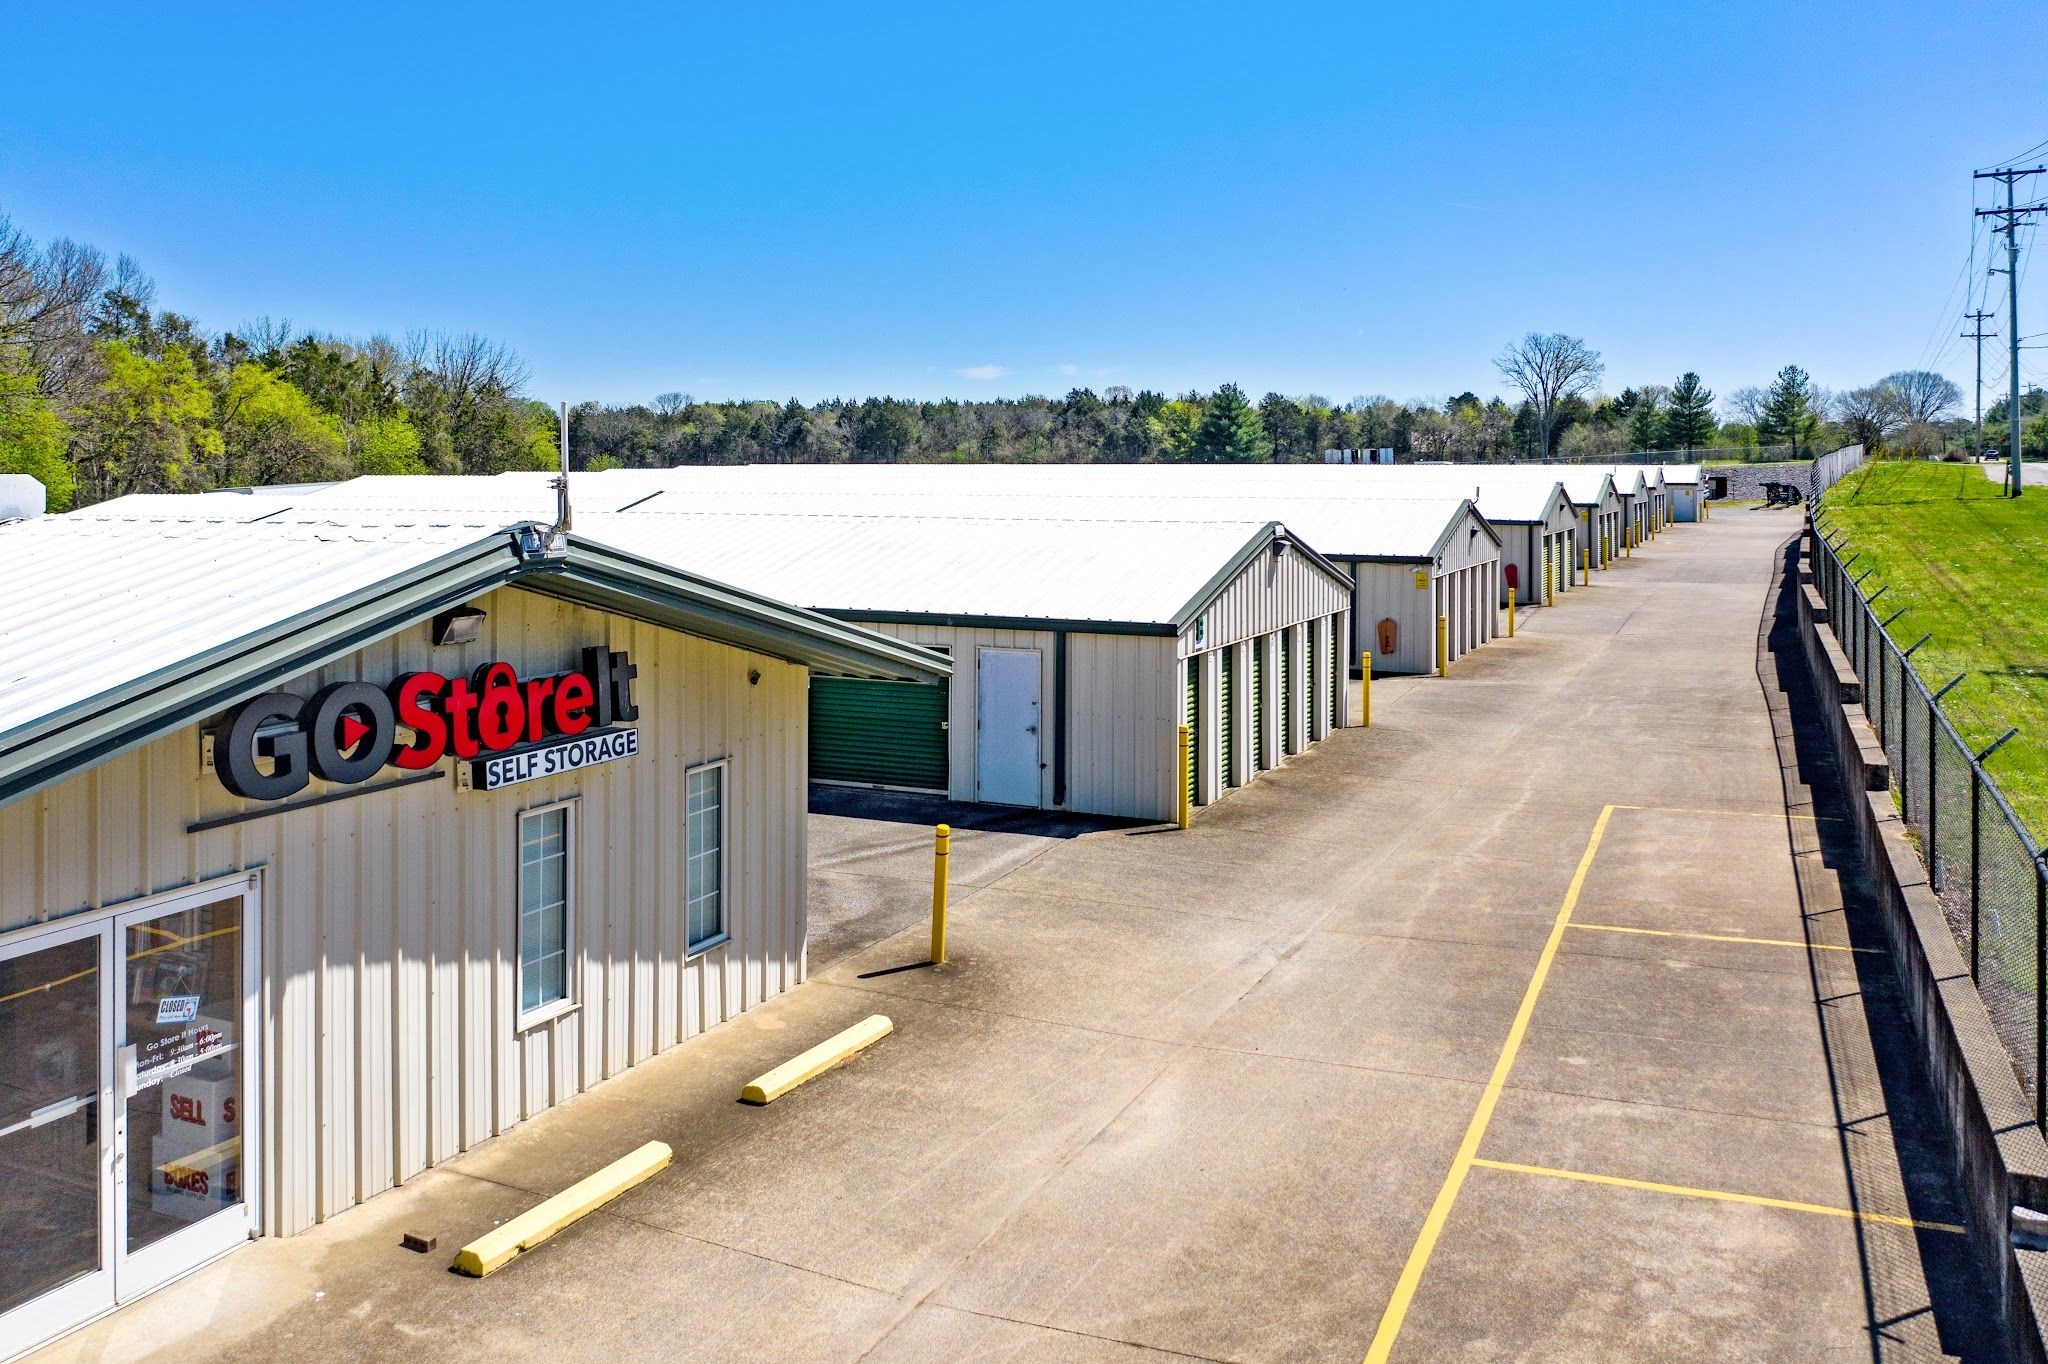 Services & Products Walter Hill Storage in Murfreesboro TN